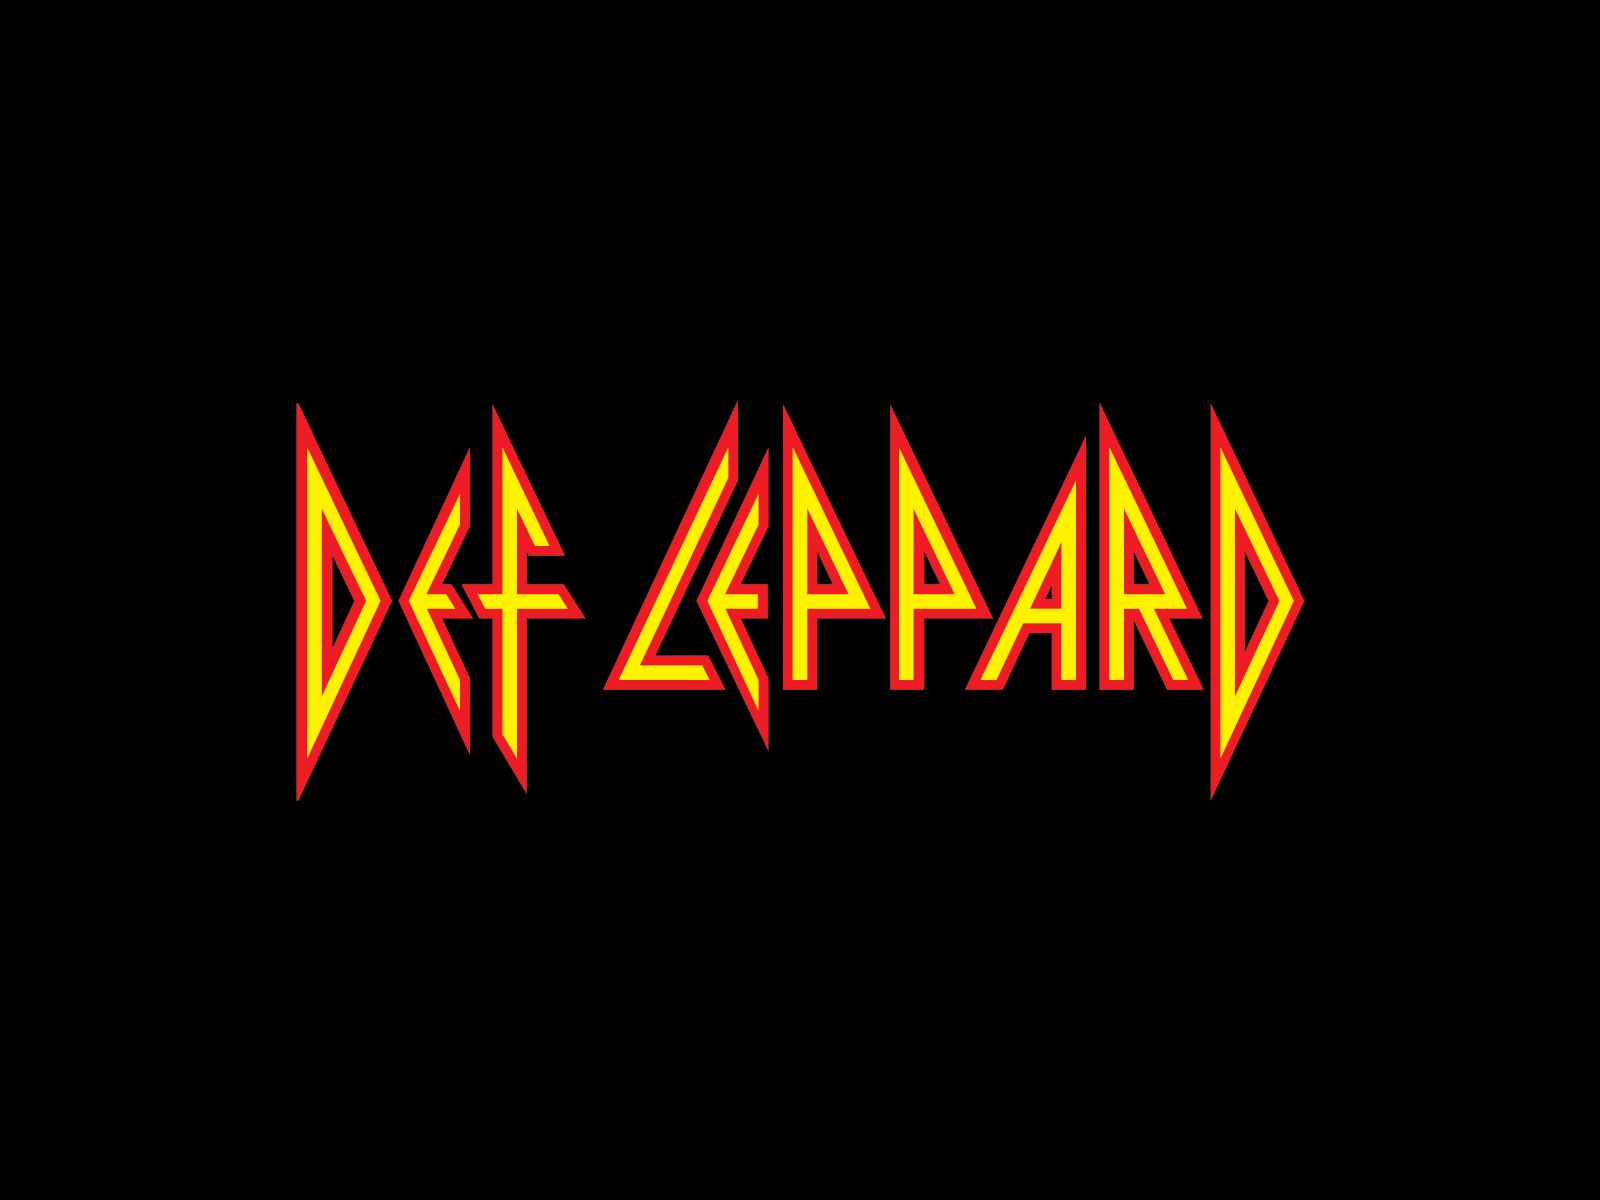 def_leppard_logo. Rock band logos, Metal band logos, Def leppard